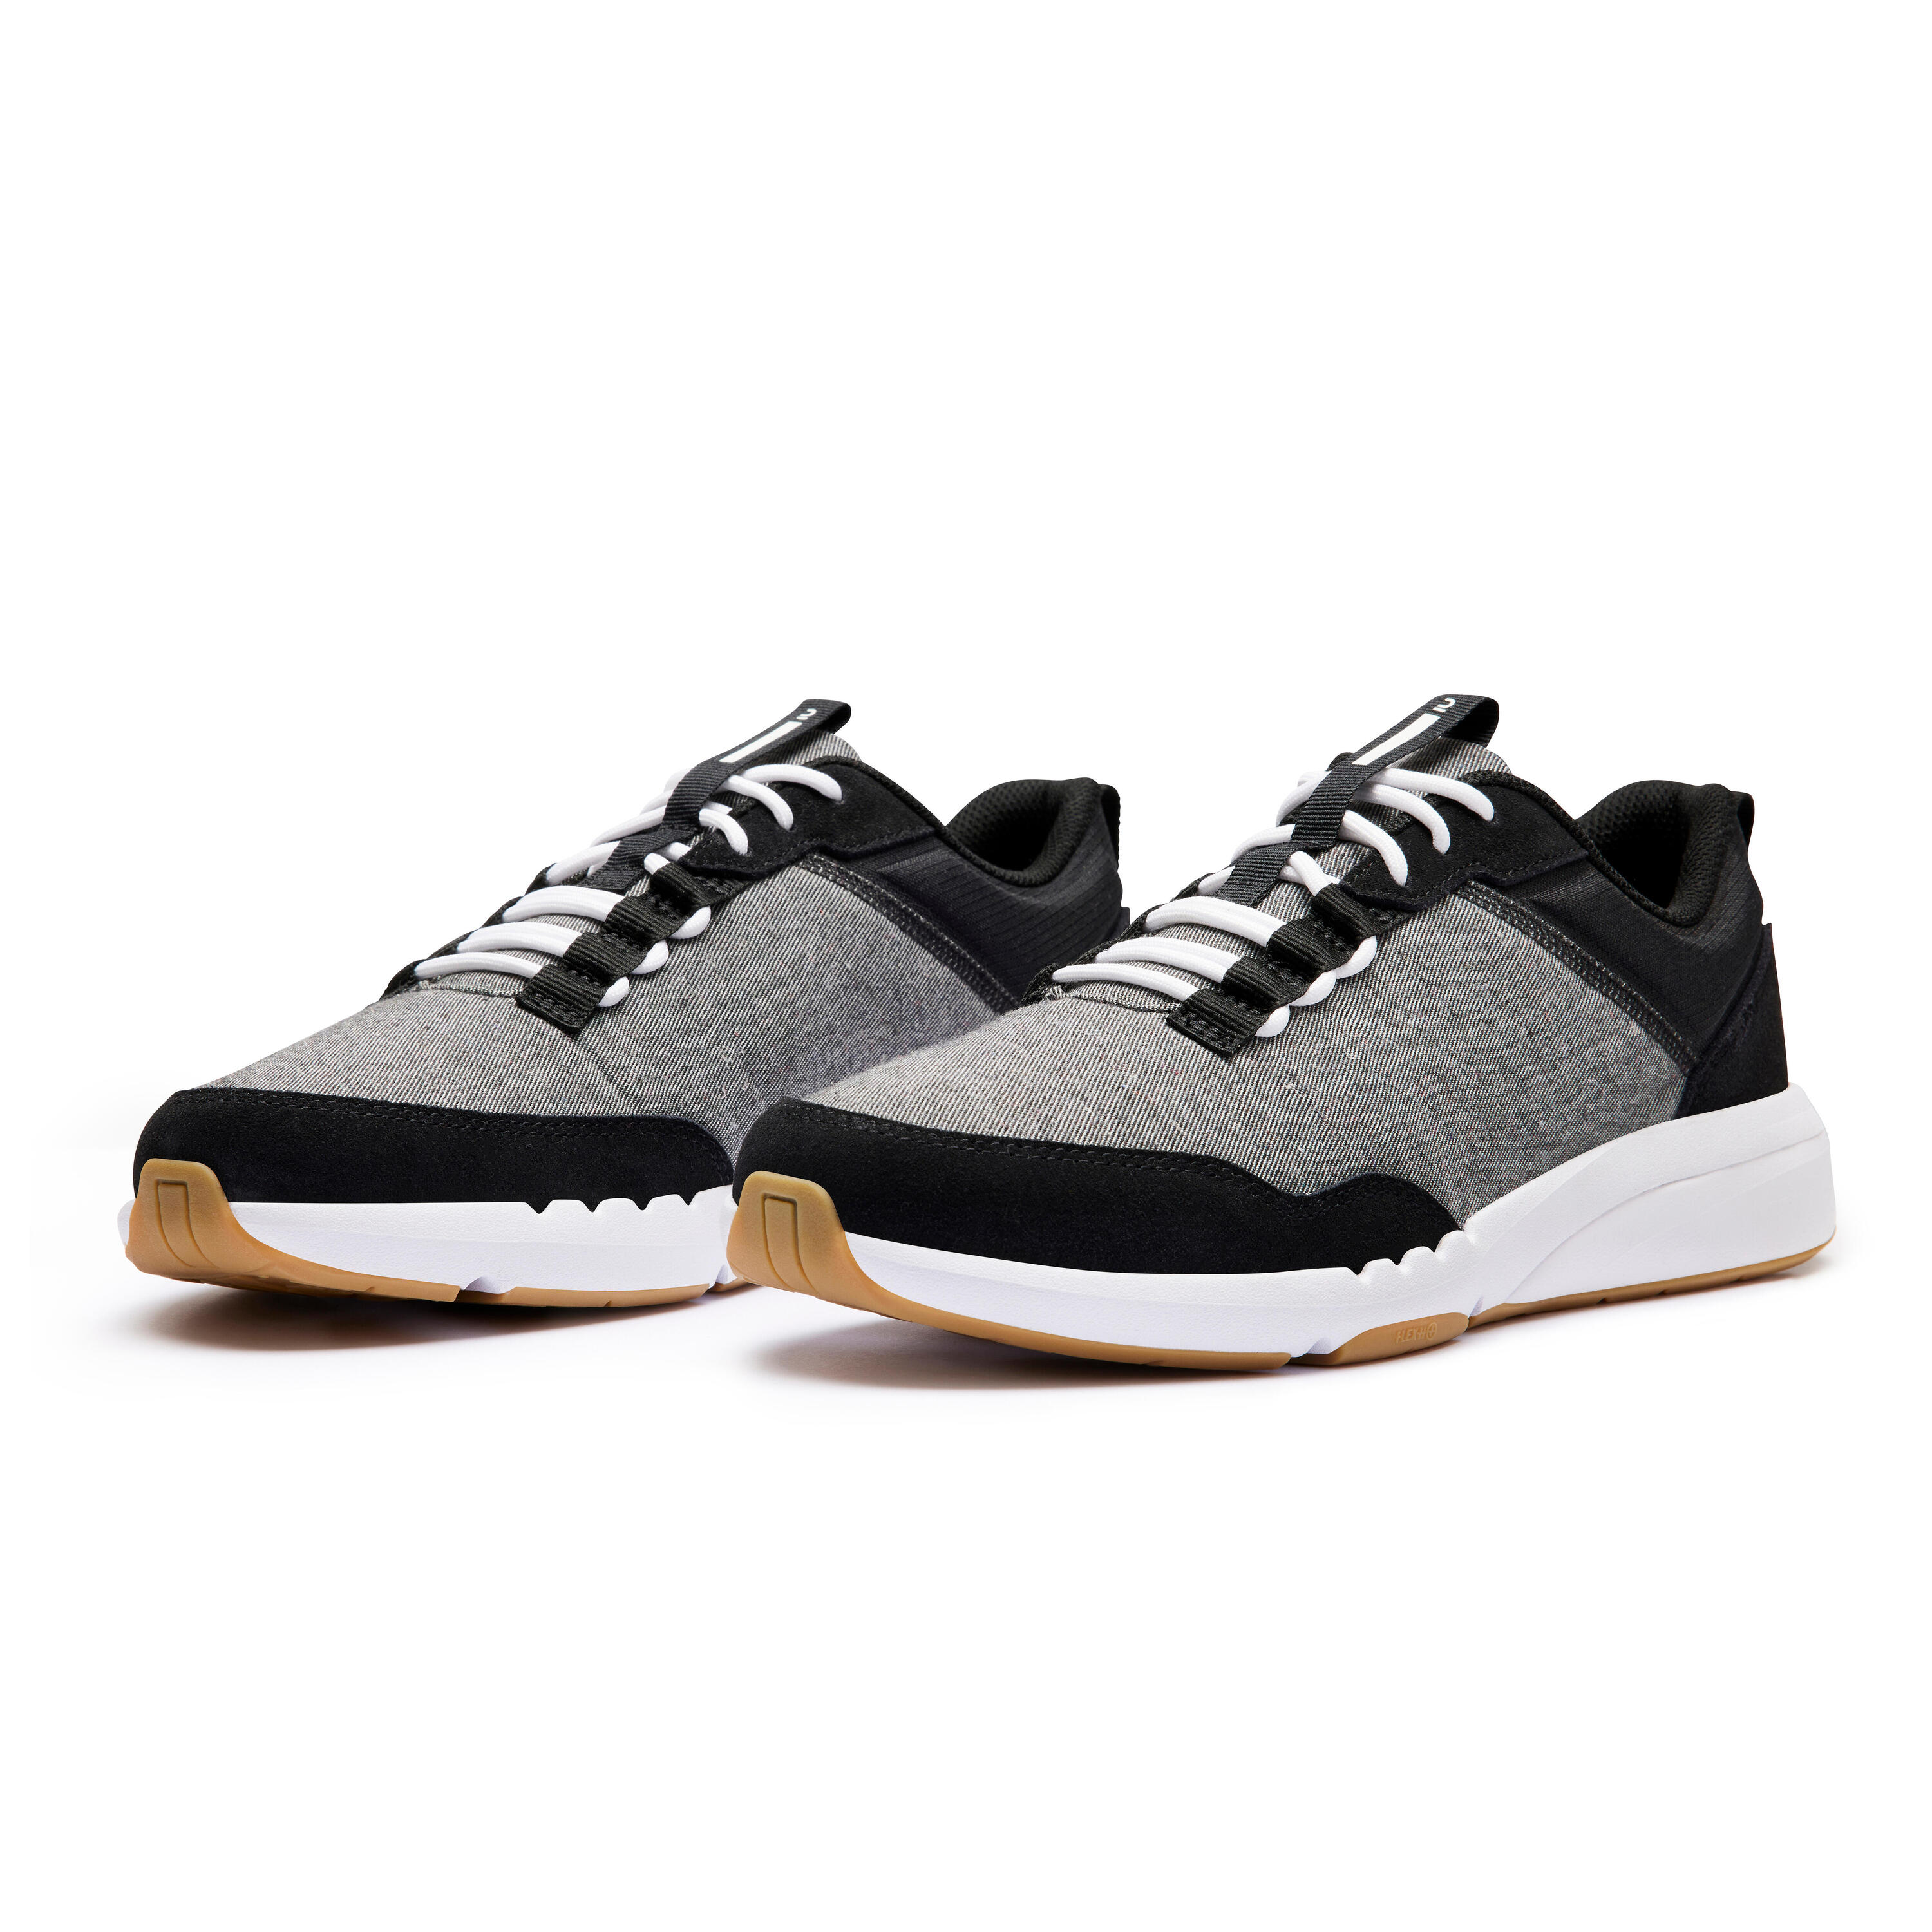 Walk Active Men's Urban Walking Shoes - Black Grey 2/8